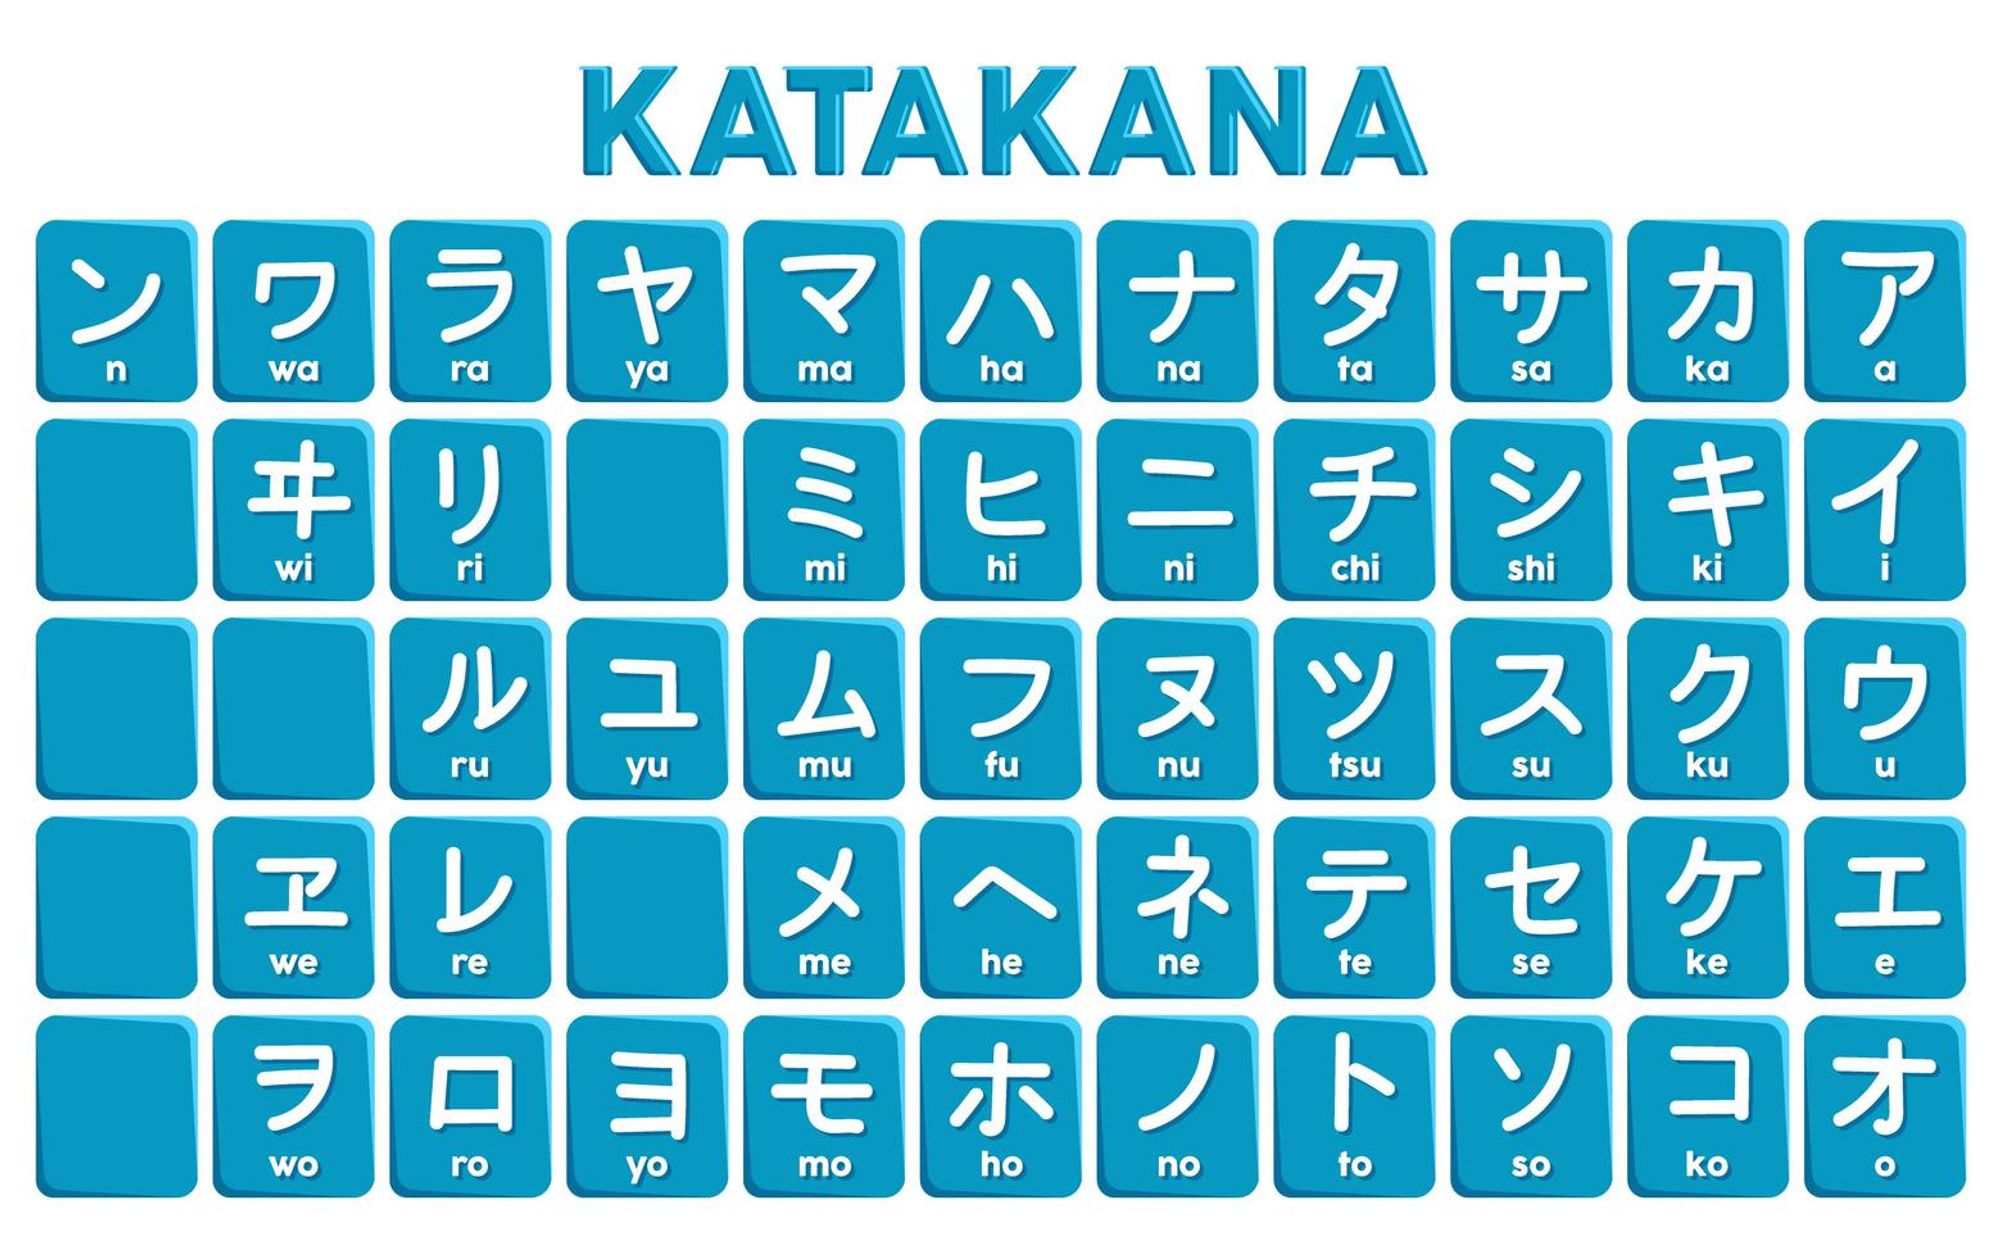 1 2 буквы ра. Katakana Азбука с. Японская Азбука катакана. Японские иероглифы катакана. Японские символы таблица Katakana.